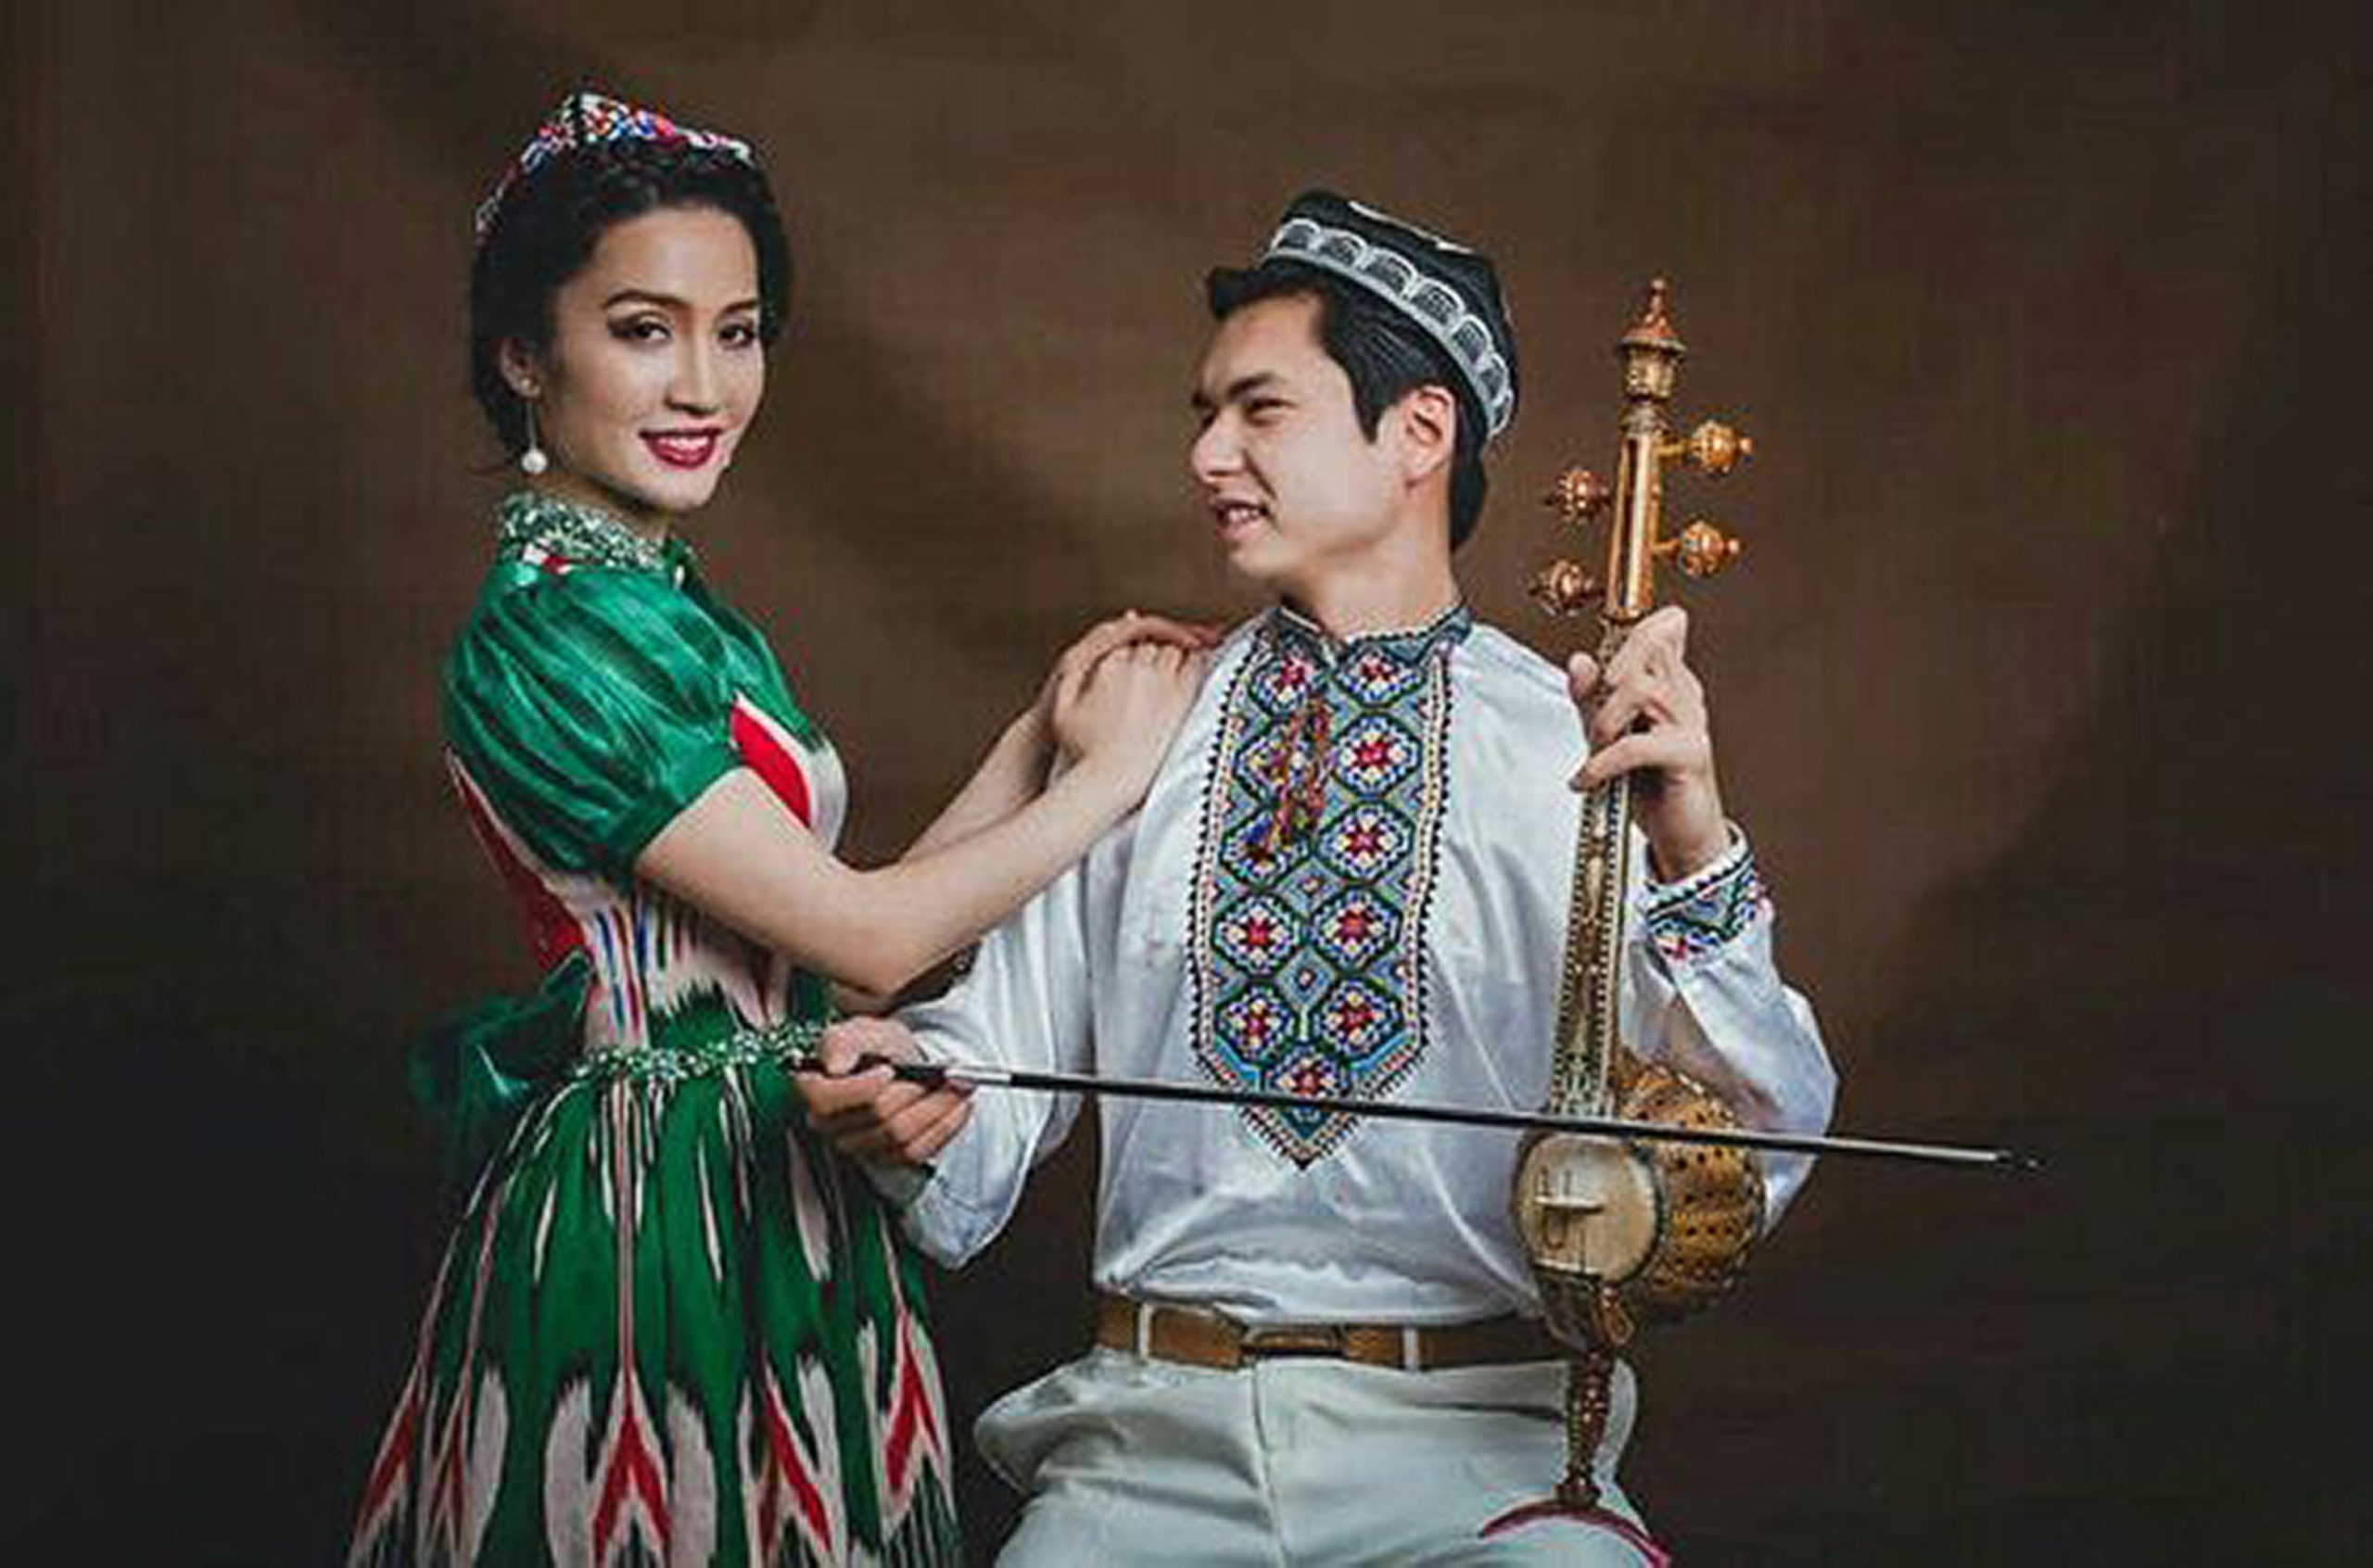 Узбекский язык красивый. Уйгуры народ. Уйгурка Mahire Emet. Нация уйгур. Самсаи уйгури.